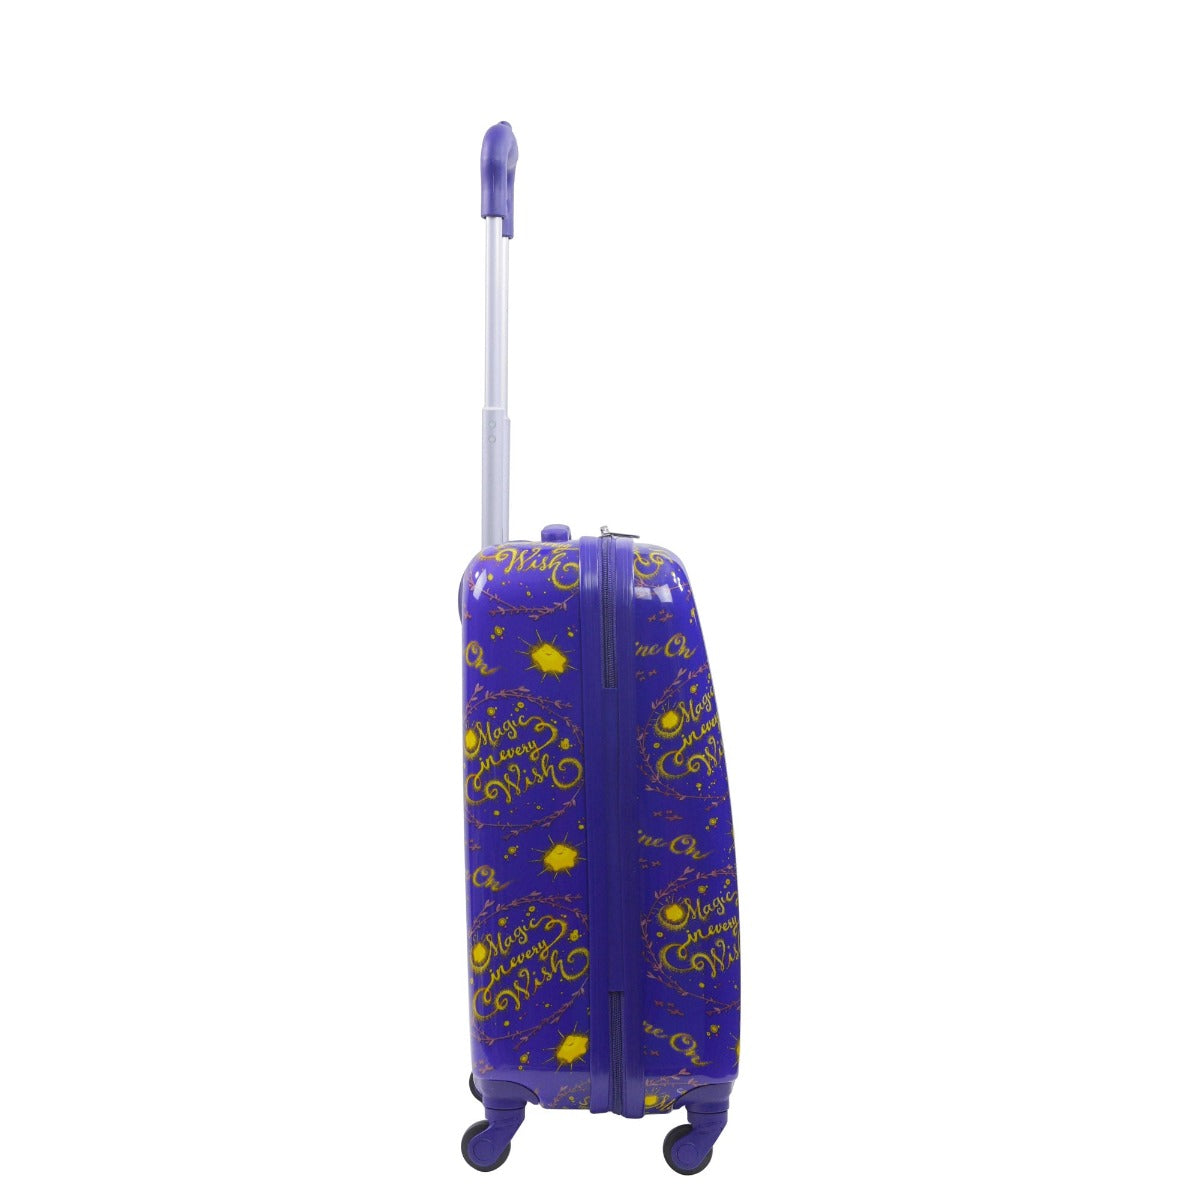 Ful Disney Wish Star Kids 21 in. Luggage, Purple